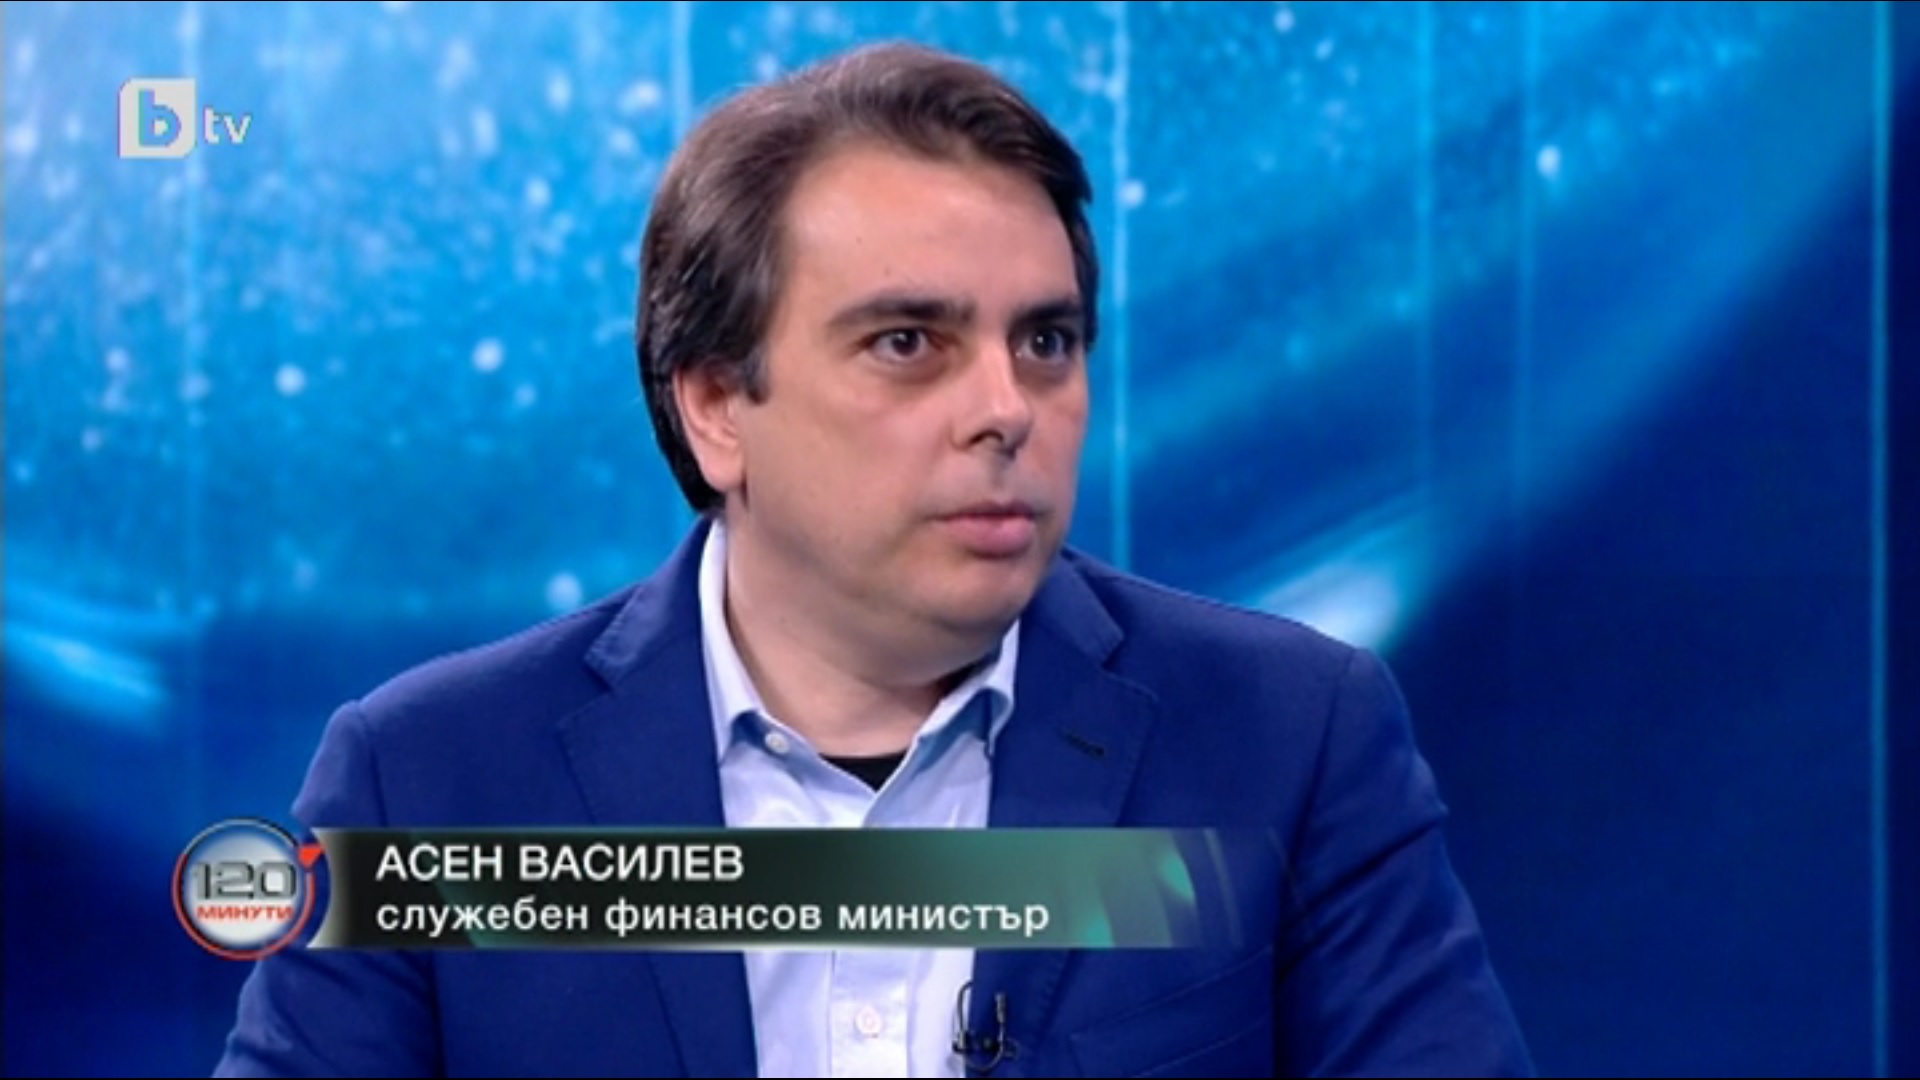 bTV, "120 минути", Асен Василев, 30.05.2021 г.